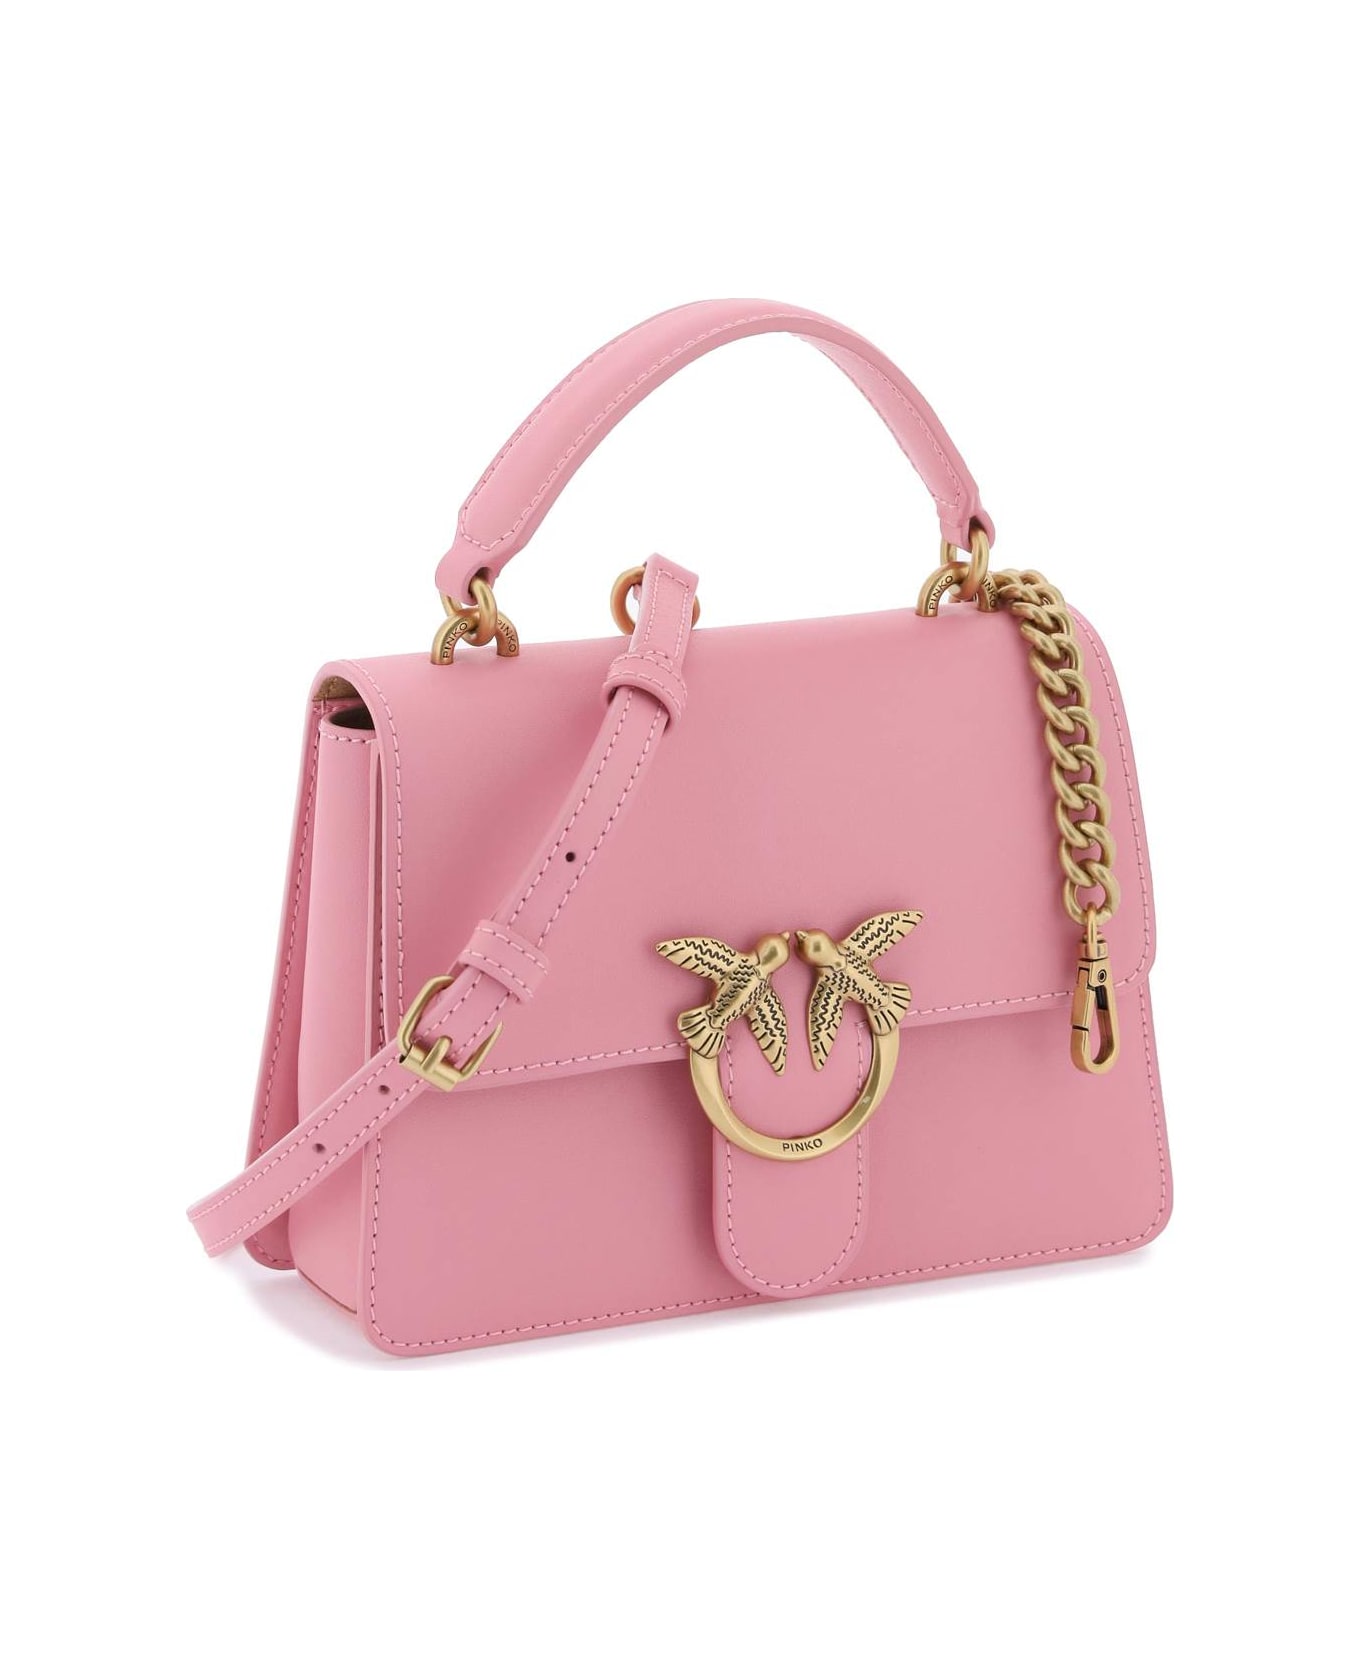 Pinko Love One Top Handle Mini Light Bag - ROSA MARINO ANTIQUE GOLD (Pink)